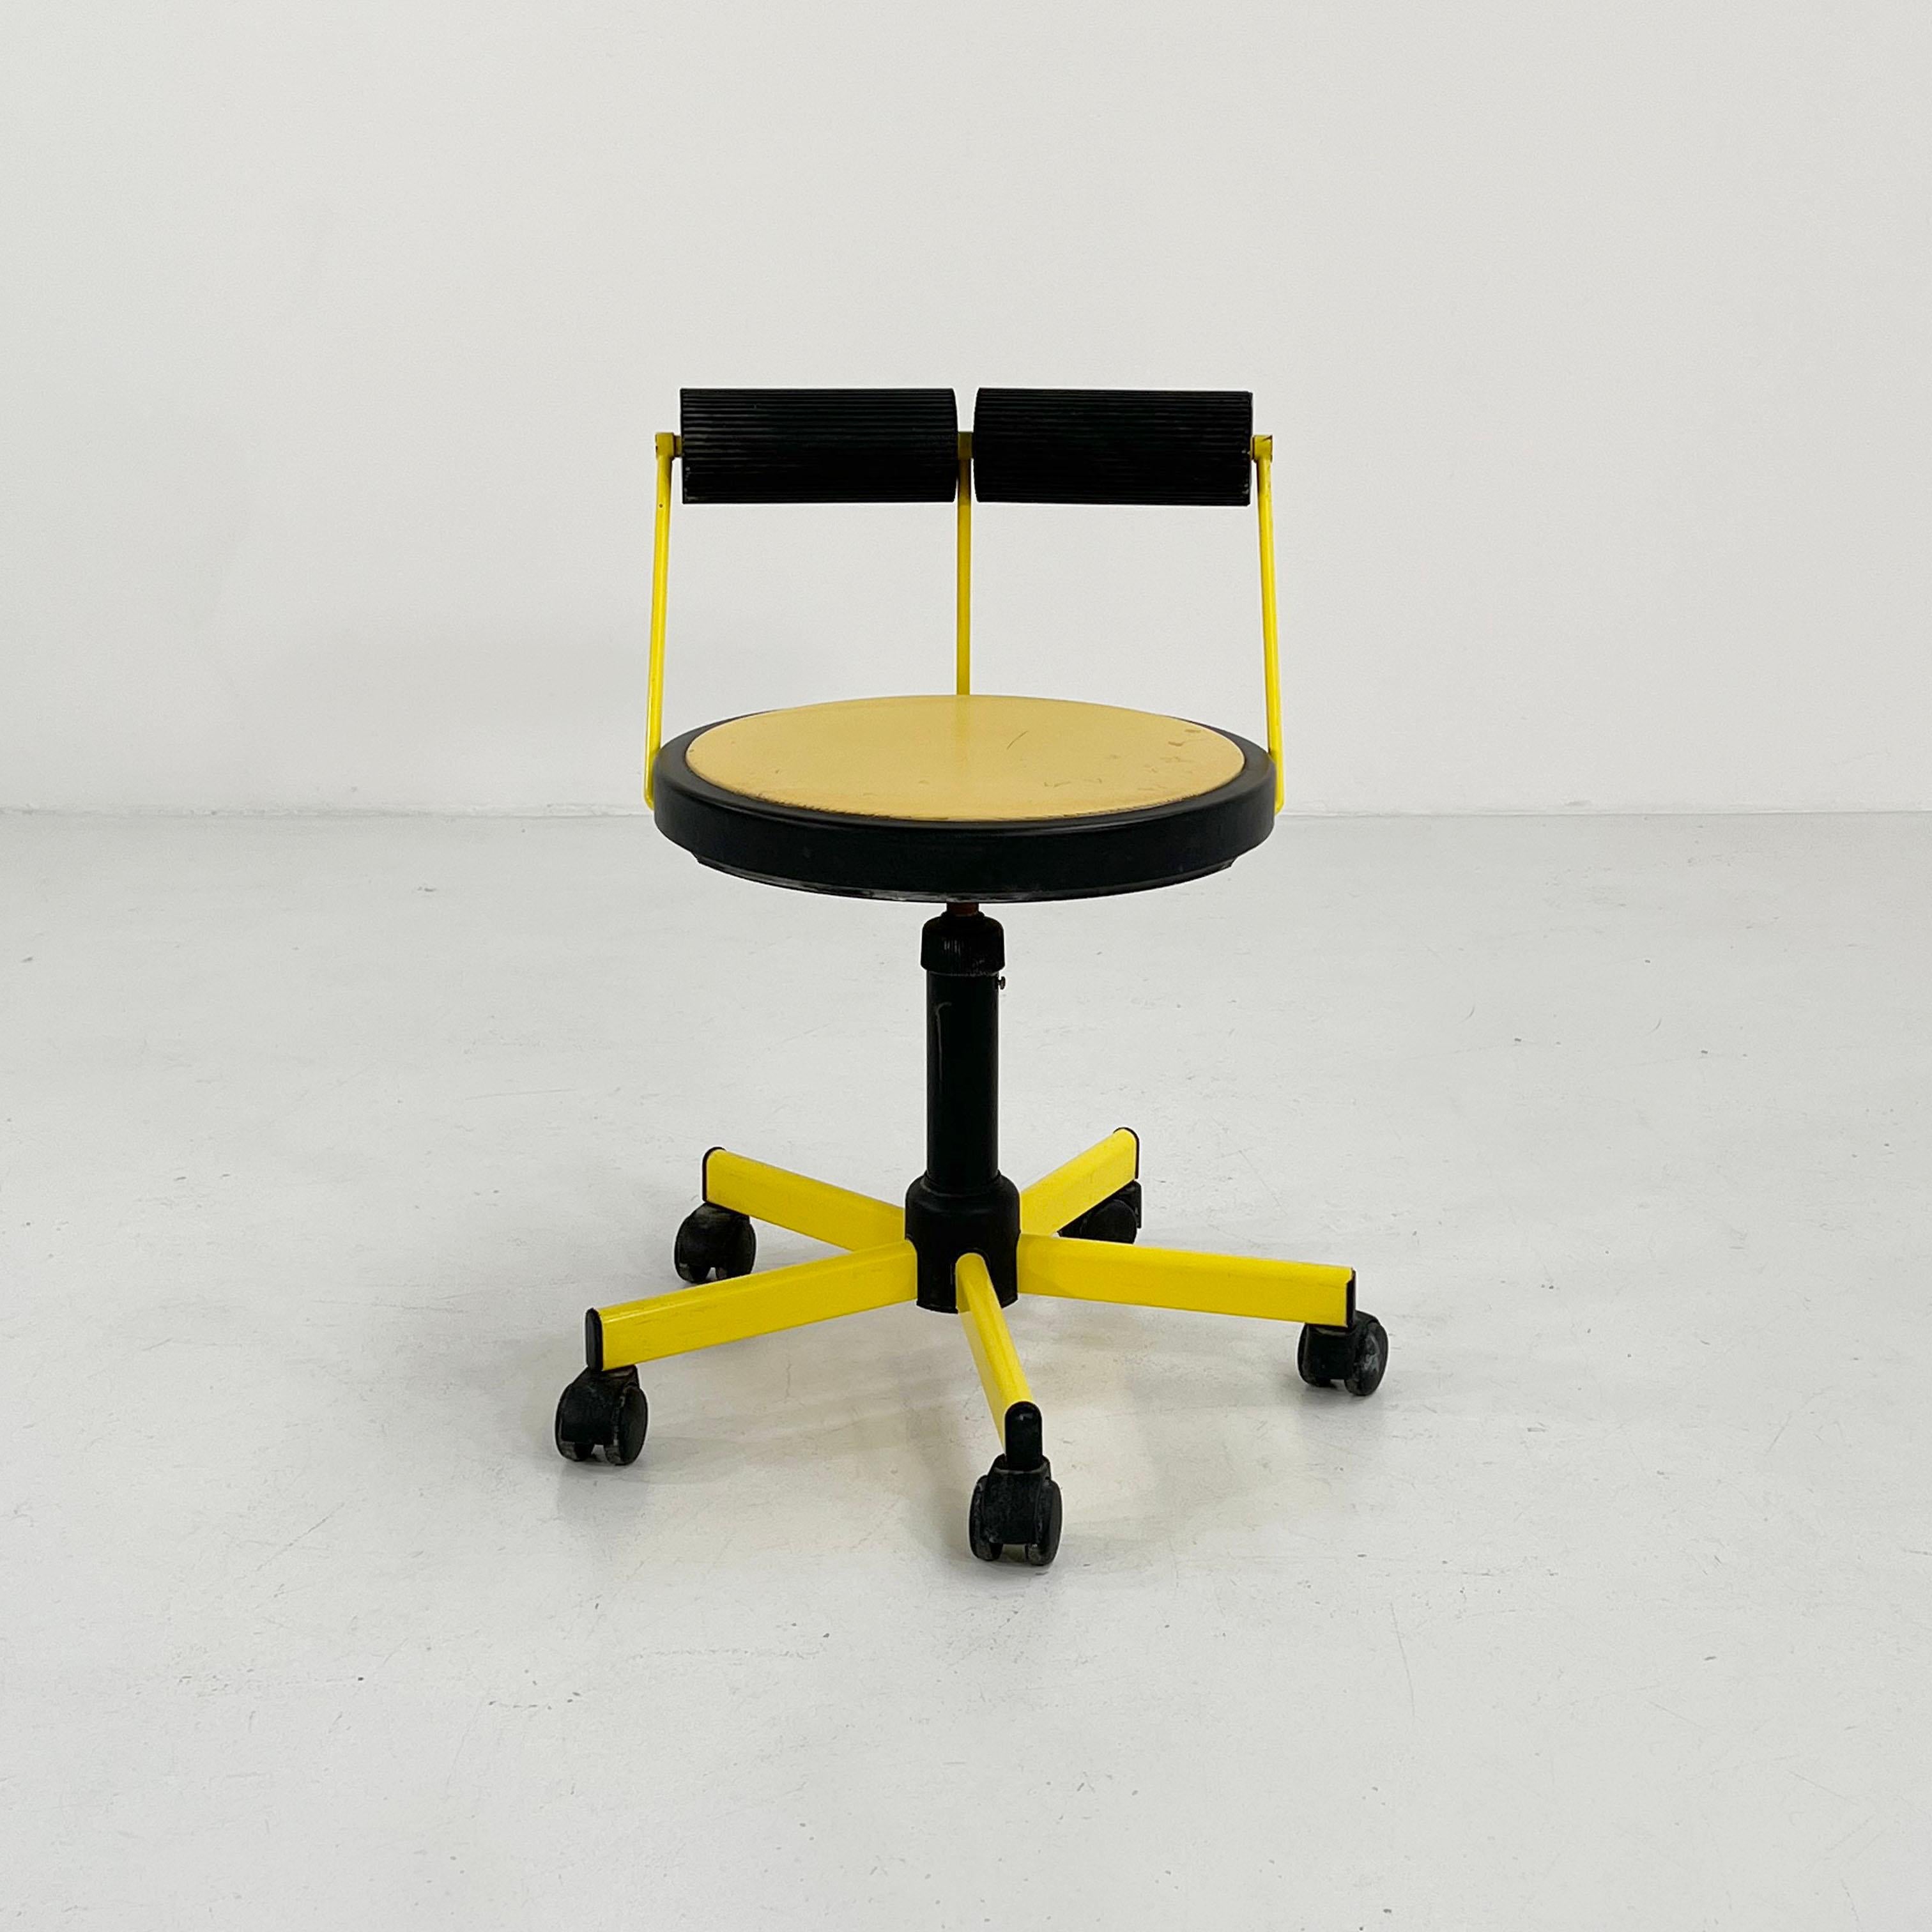 Adjustable Yellow Desk Chair from Bieffeplast, 1980s
Producer - Bieffeplast
Design Period - Eighties
Measurements - Width 56 cm x Depth 56 cm x Height min 68 cm / Max 81 cm x Seat Height min 45 cm / max 58 cm 
Materials - Metal, Plastic
Color -